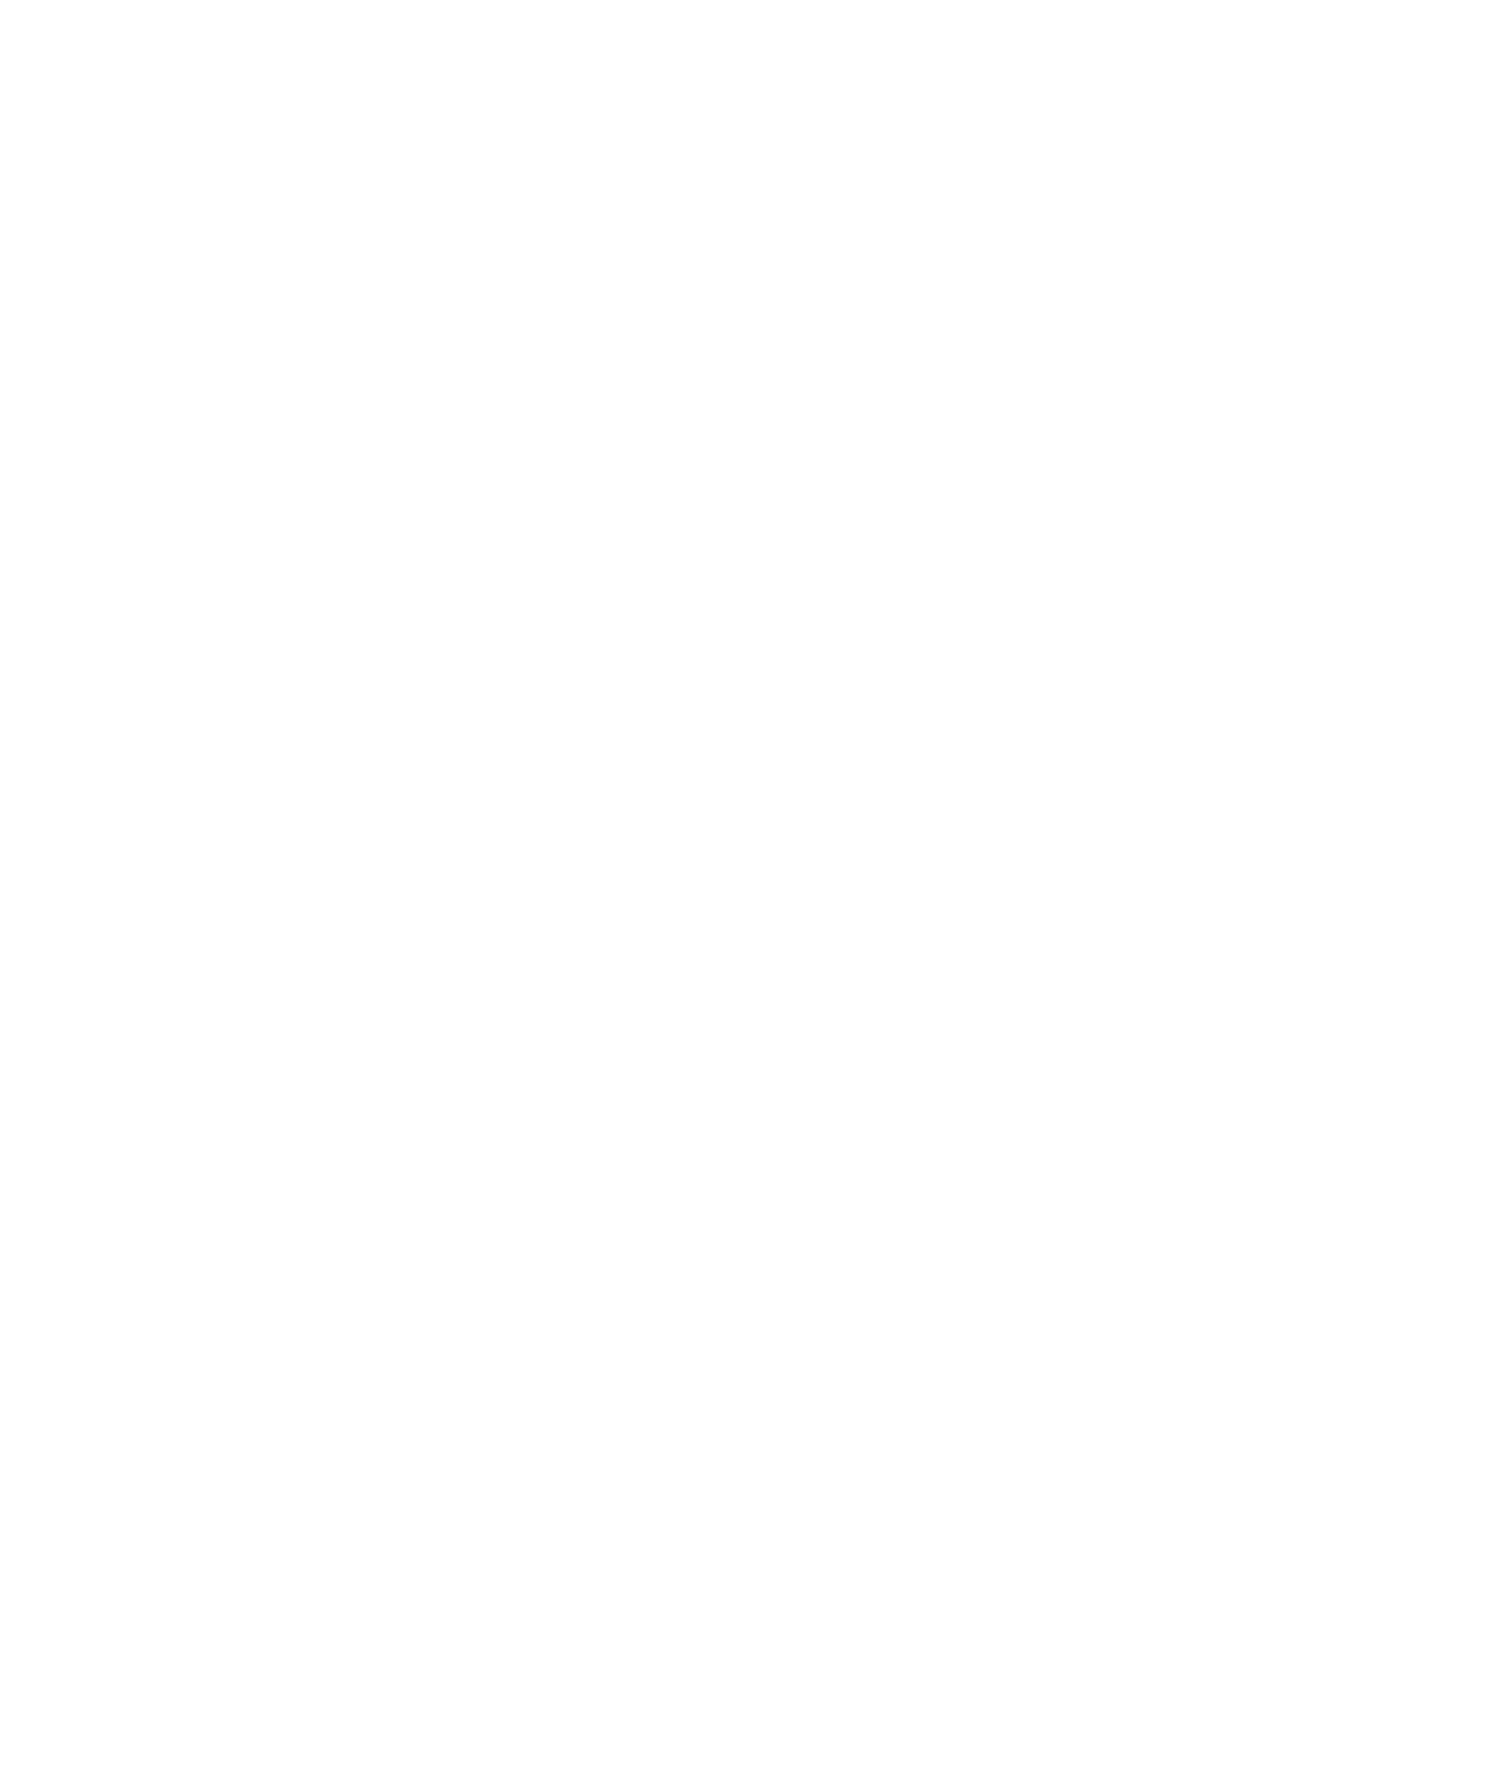 Renegades WRFC